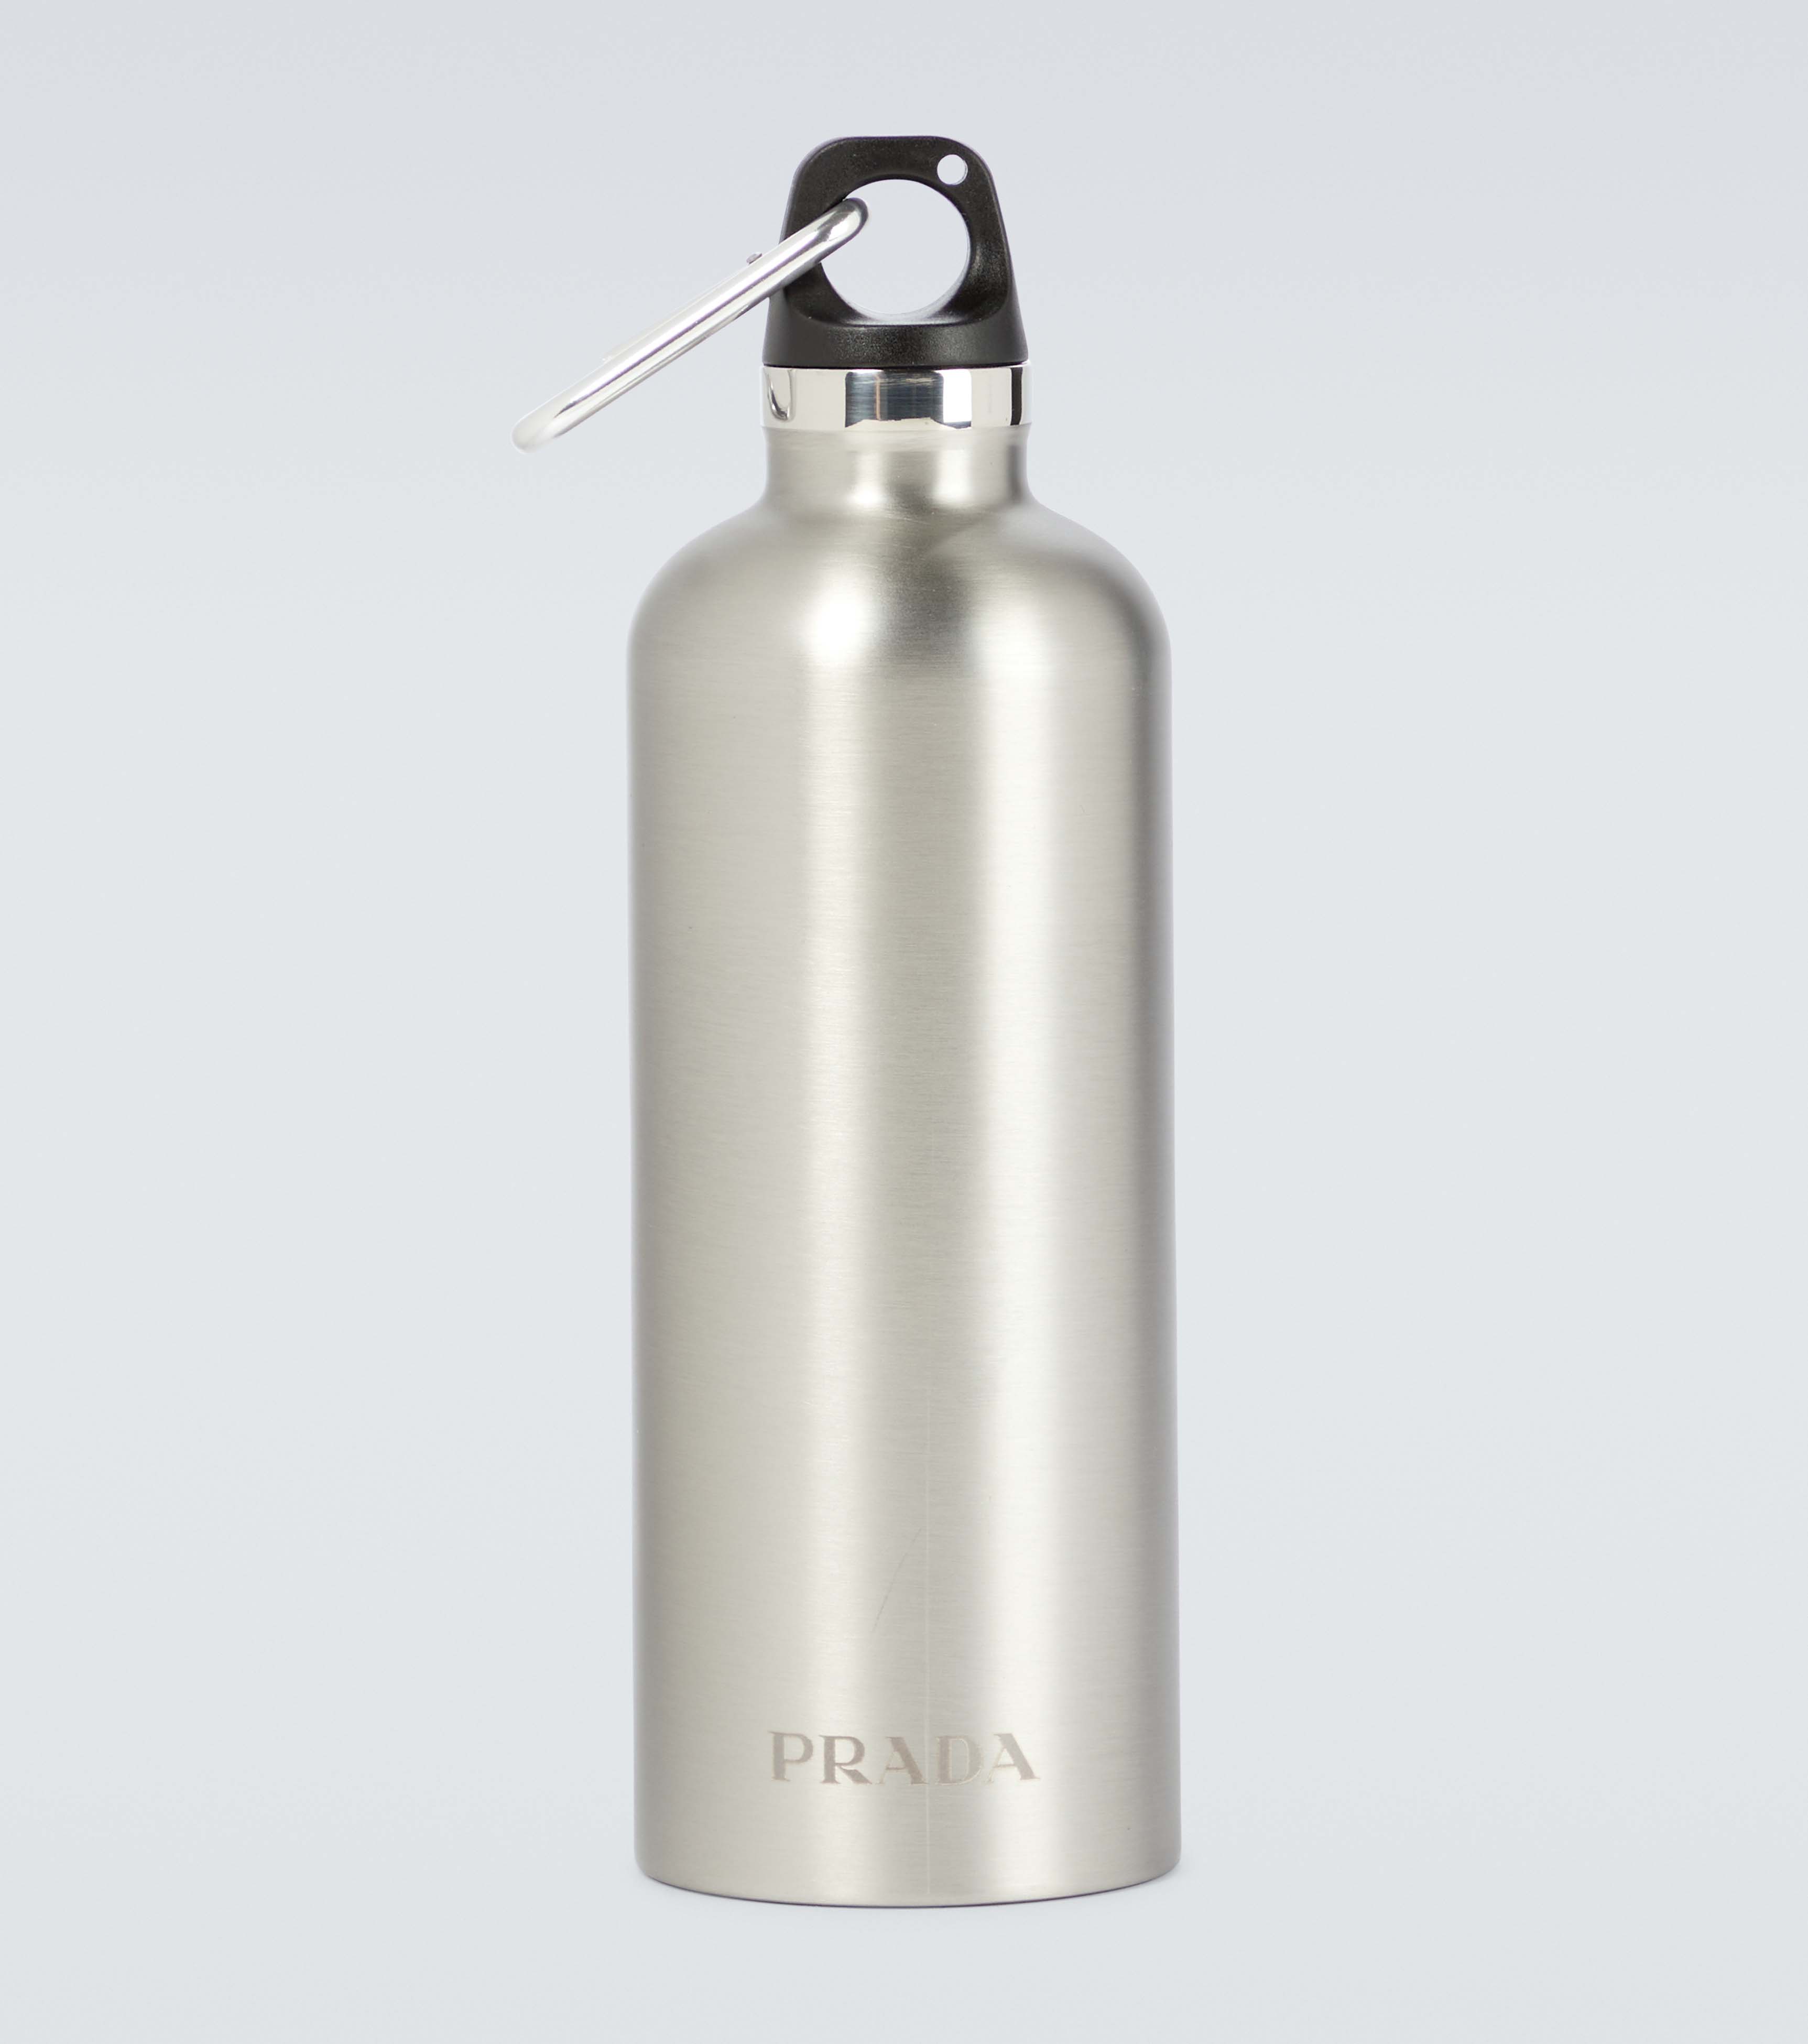 Prada stainless steel water bottle